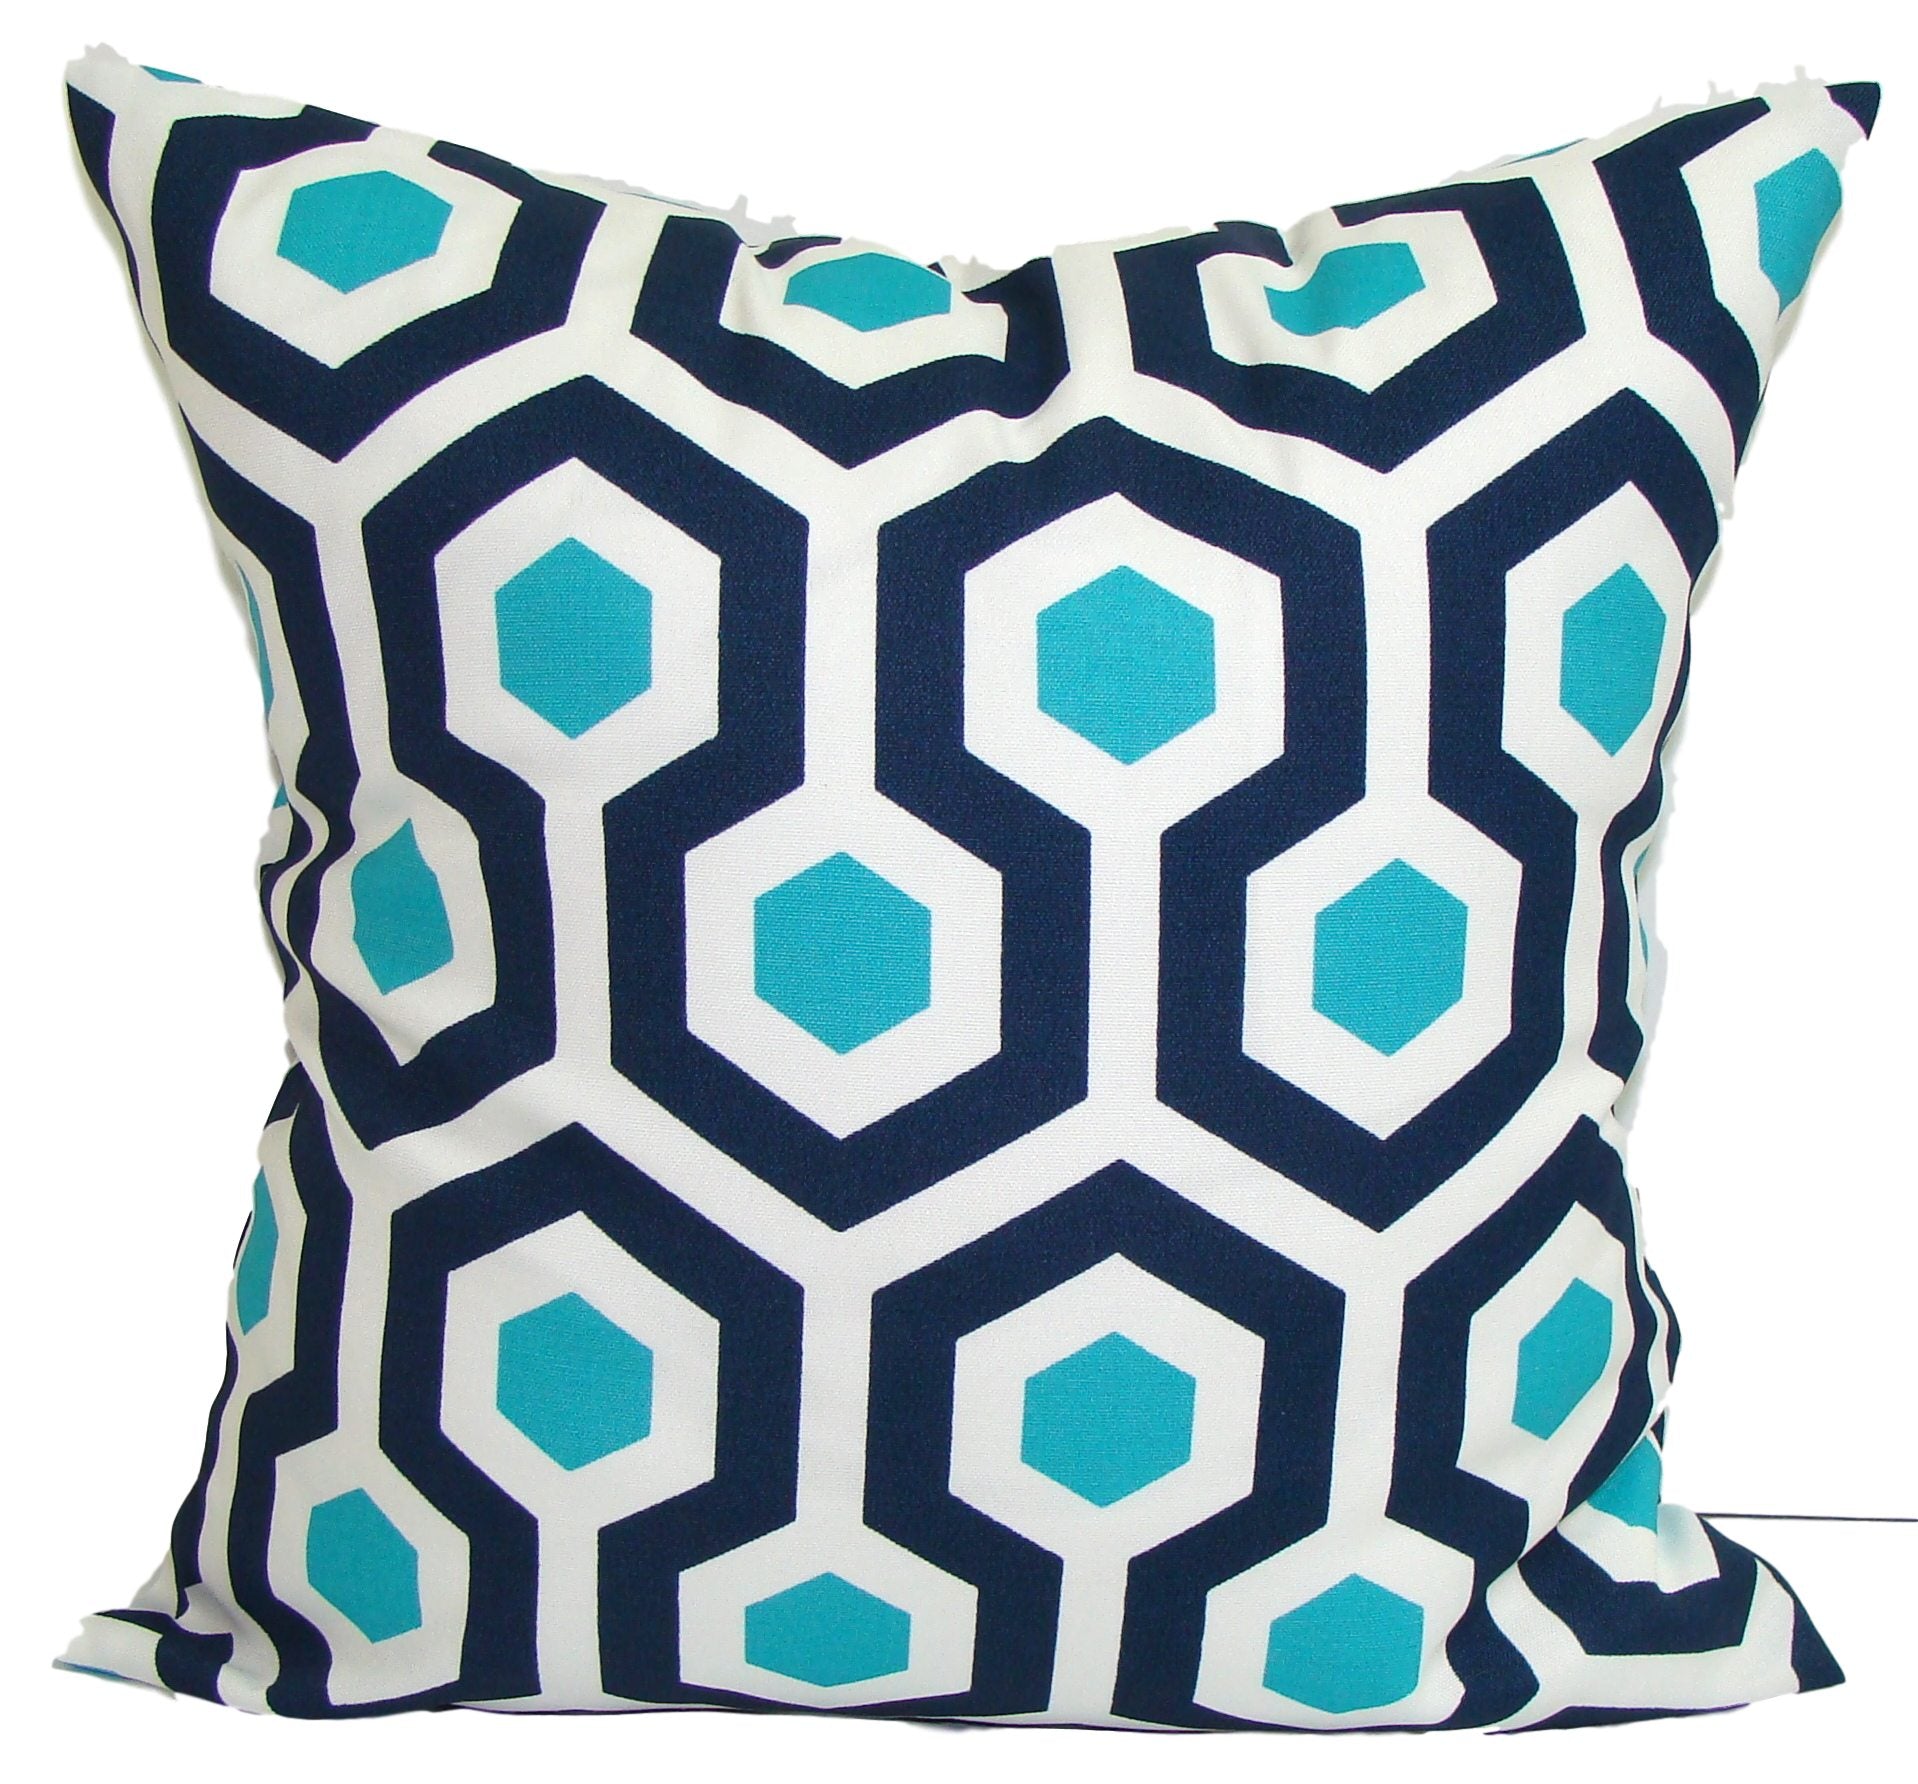 https://cdn.shopify.com/s/files/1/0918/9296/products/decorative-pillows-pillows-pillow-covers-throw-pillows-toss-pillows-bedding-custom-pillows-home-decor-indoor-outdoor-blue-geometric-1.jpeg?v=1533761314